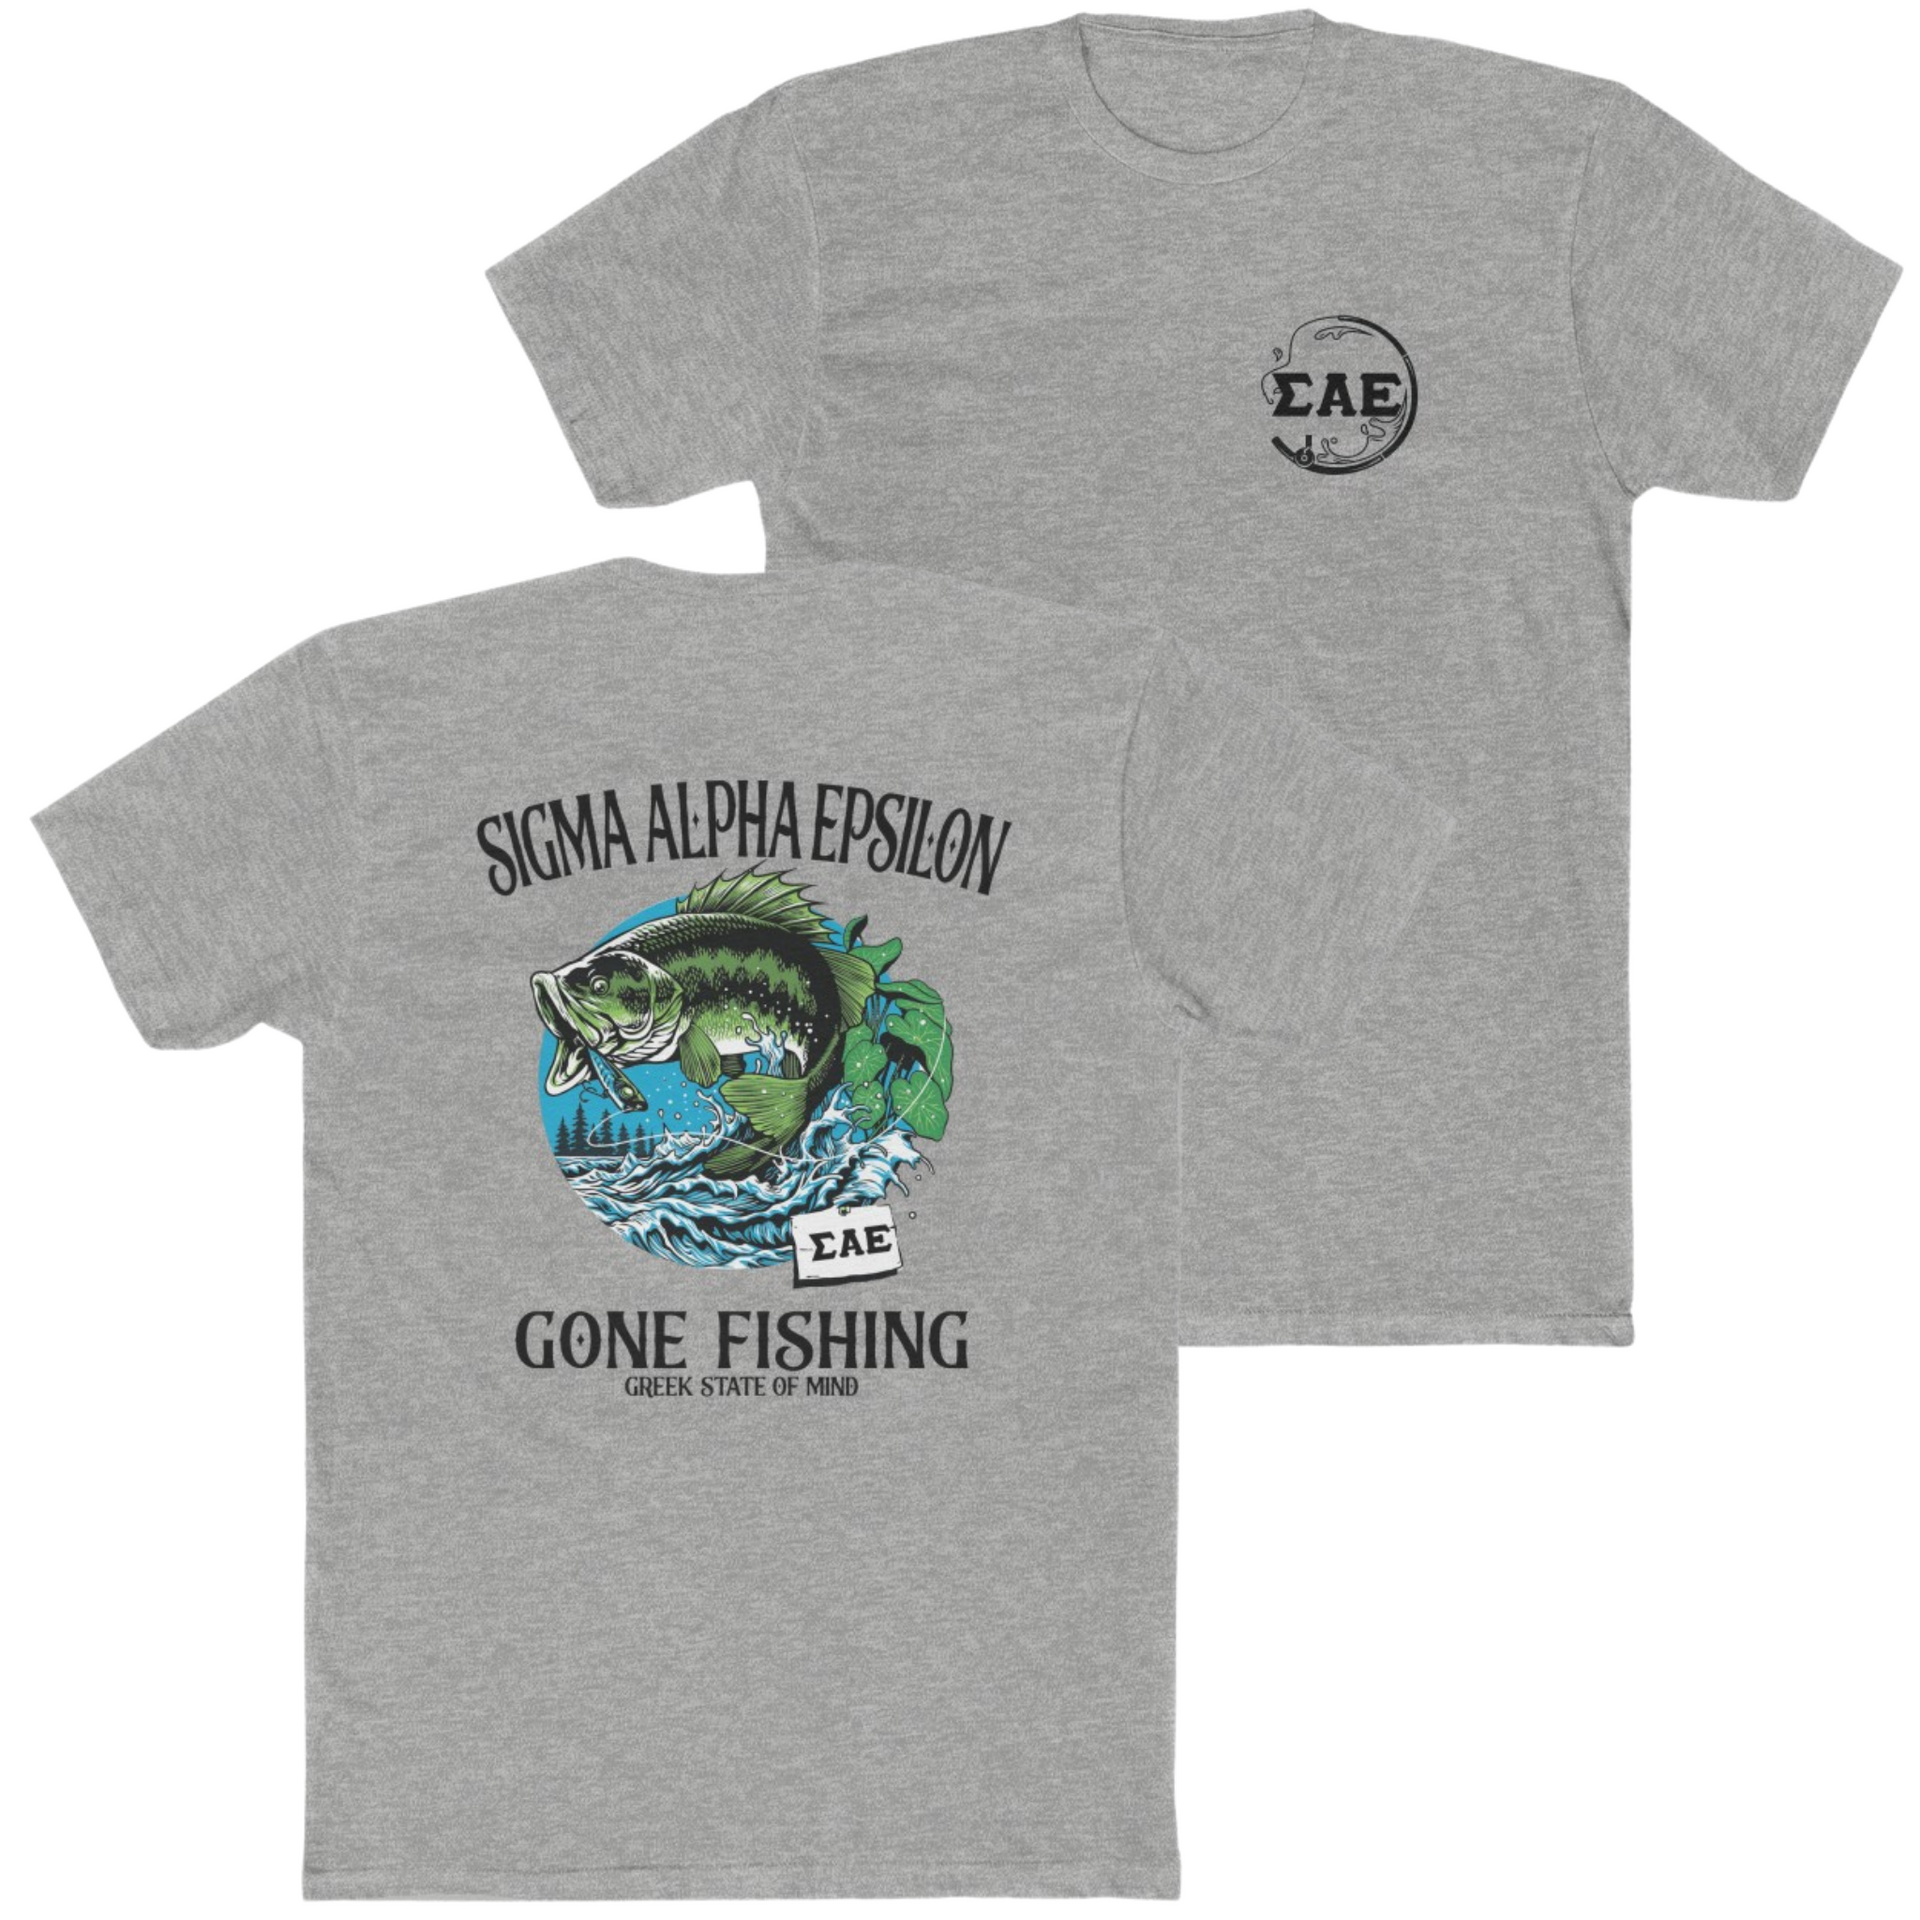 Grey Sigma Alpha Epsilon Graphic T-Shirt | Gone Fishing | Sigma Alpha Epsilon Clothing and Merchandise